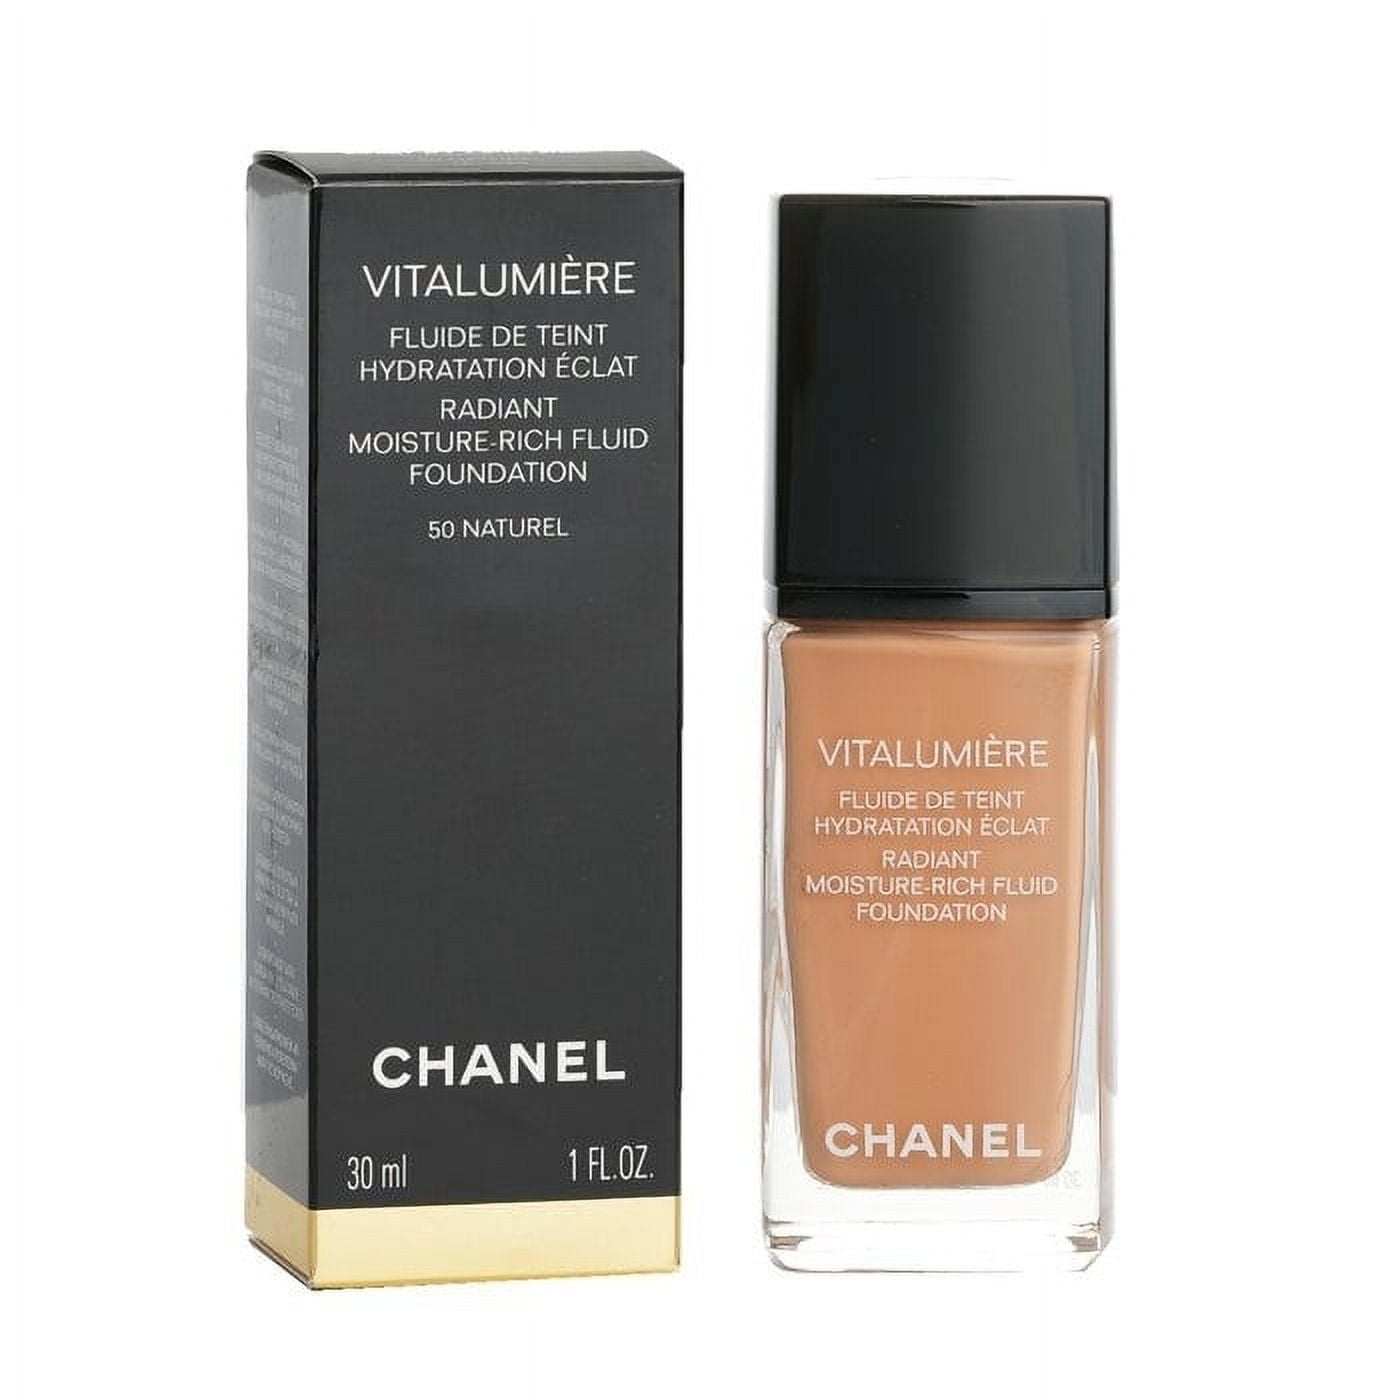 Chanel Vitalumiere Radiant Moisture Rich Fluid Foundation - #50